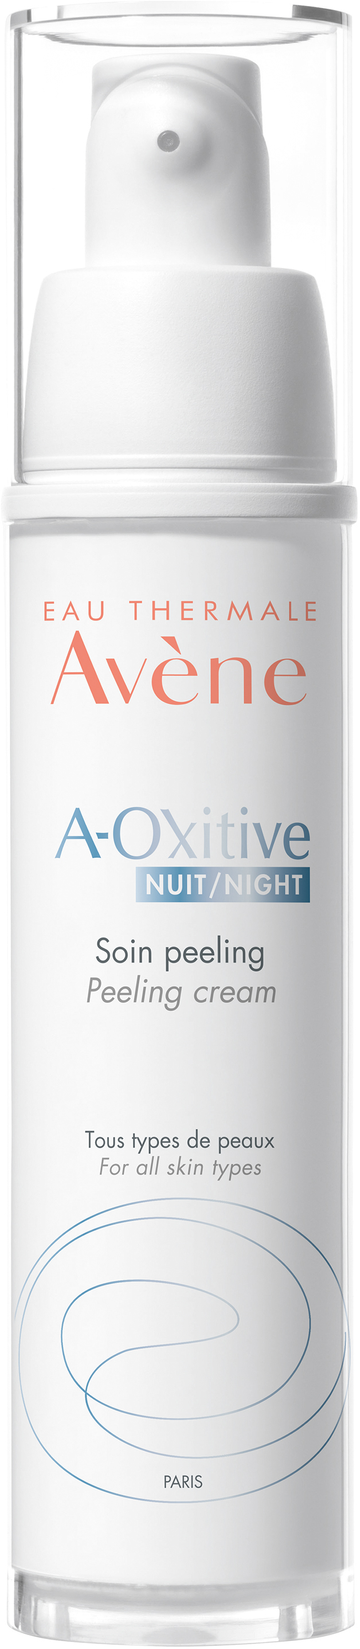 Avène A-Oxitive night cream